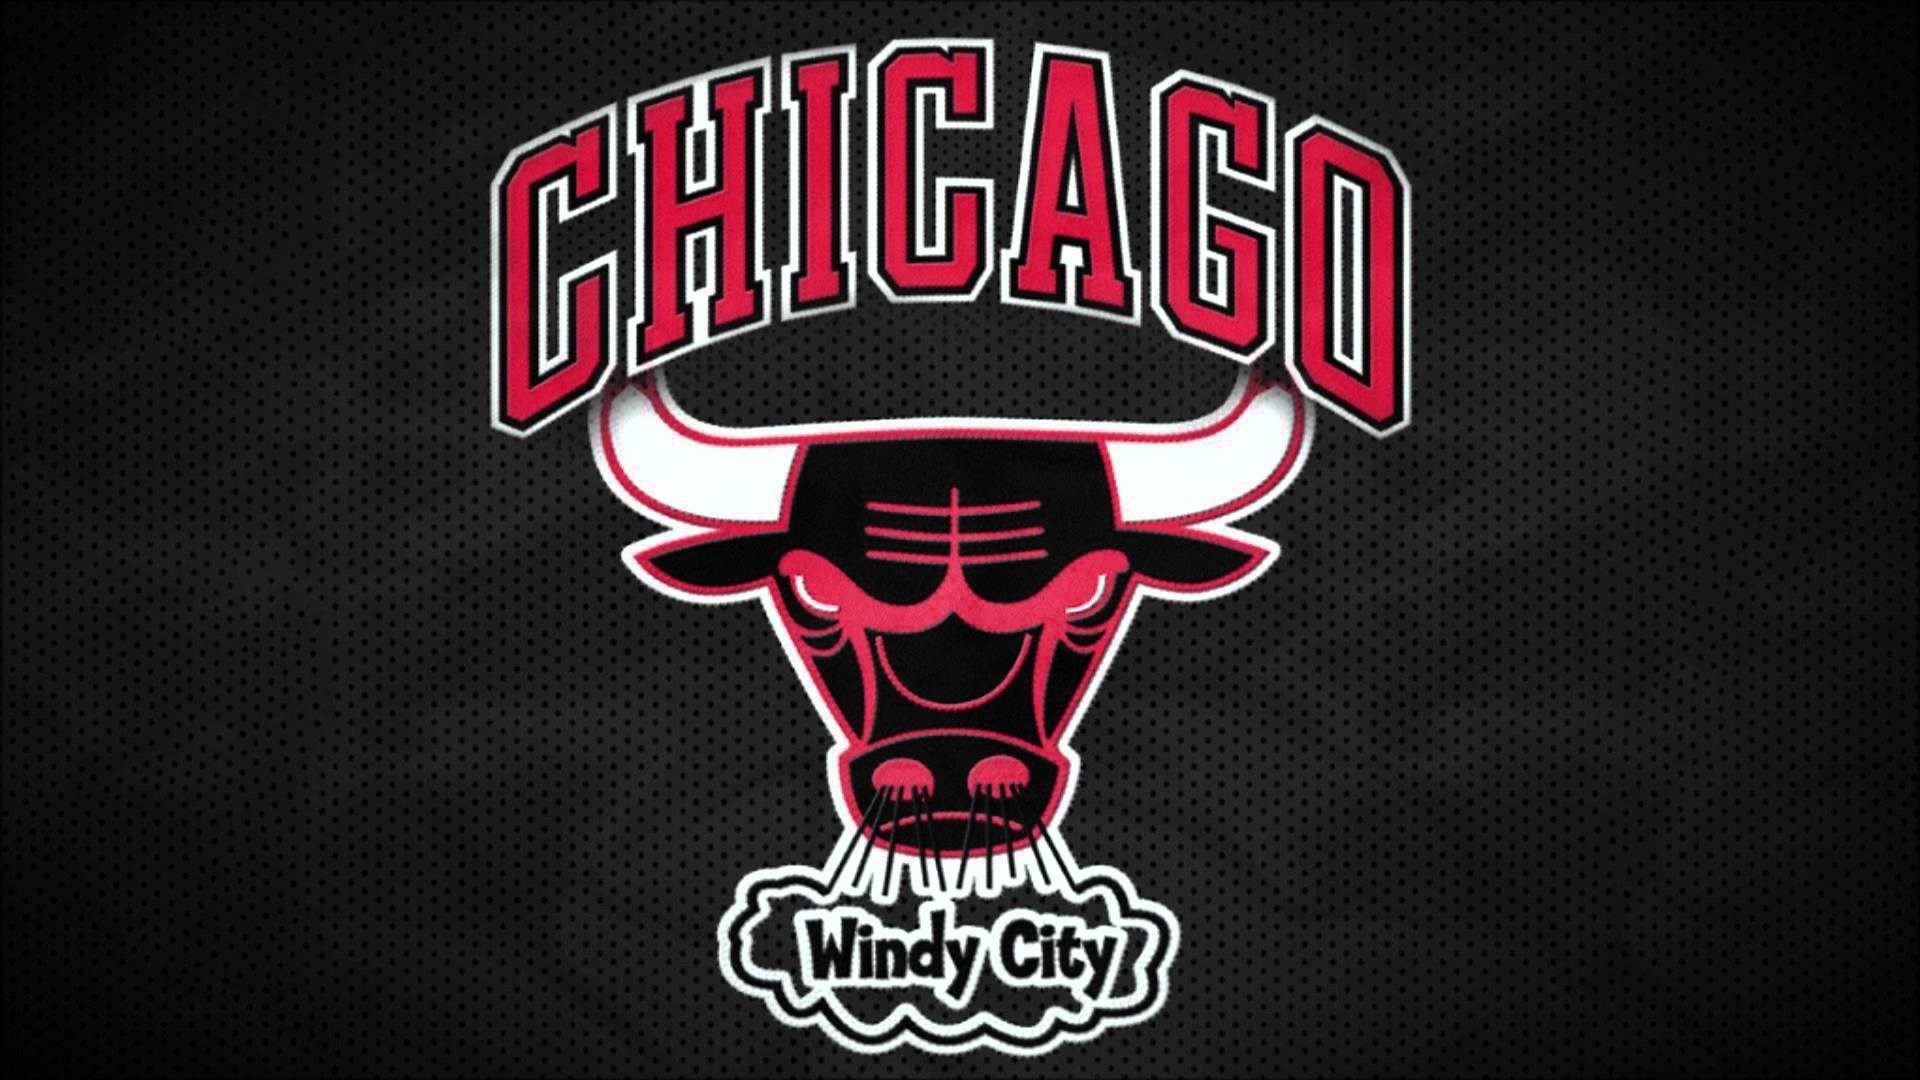 Chicago bulls wallpaper desktop